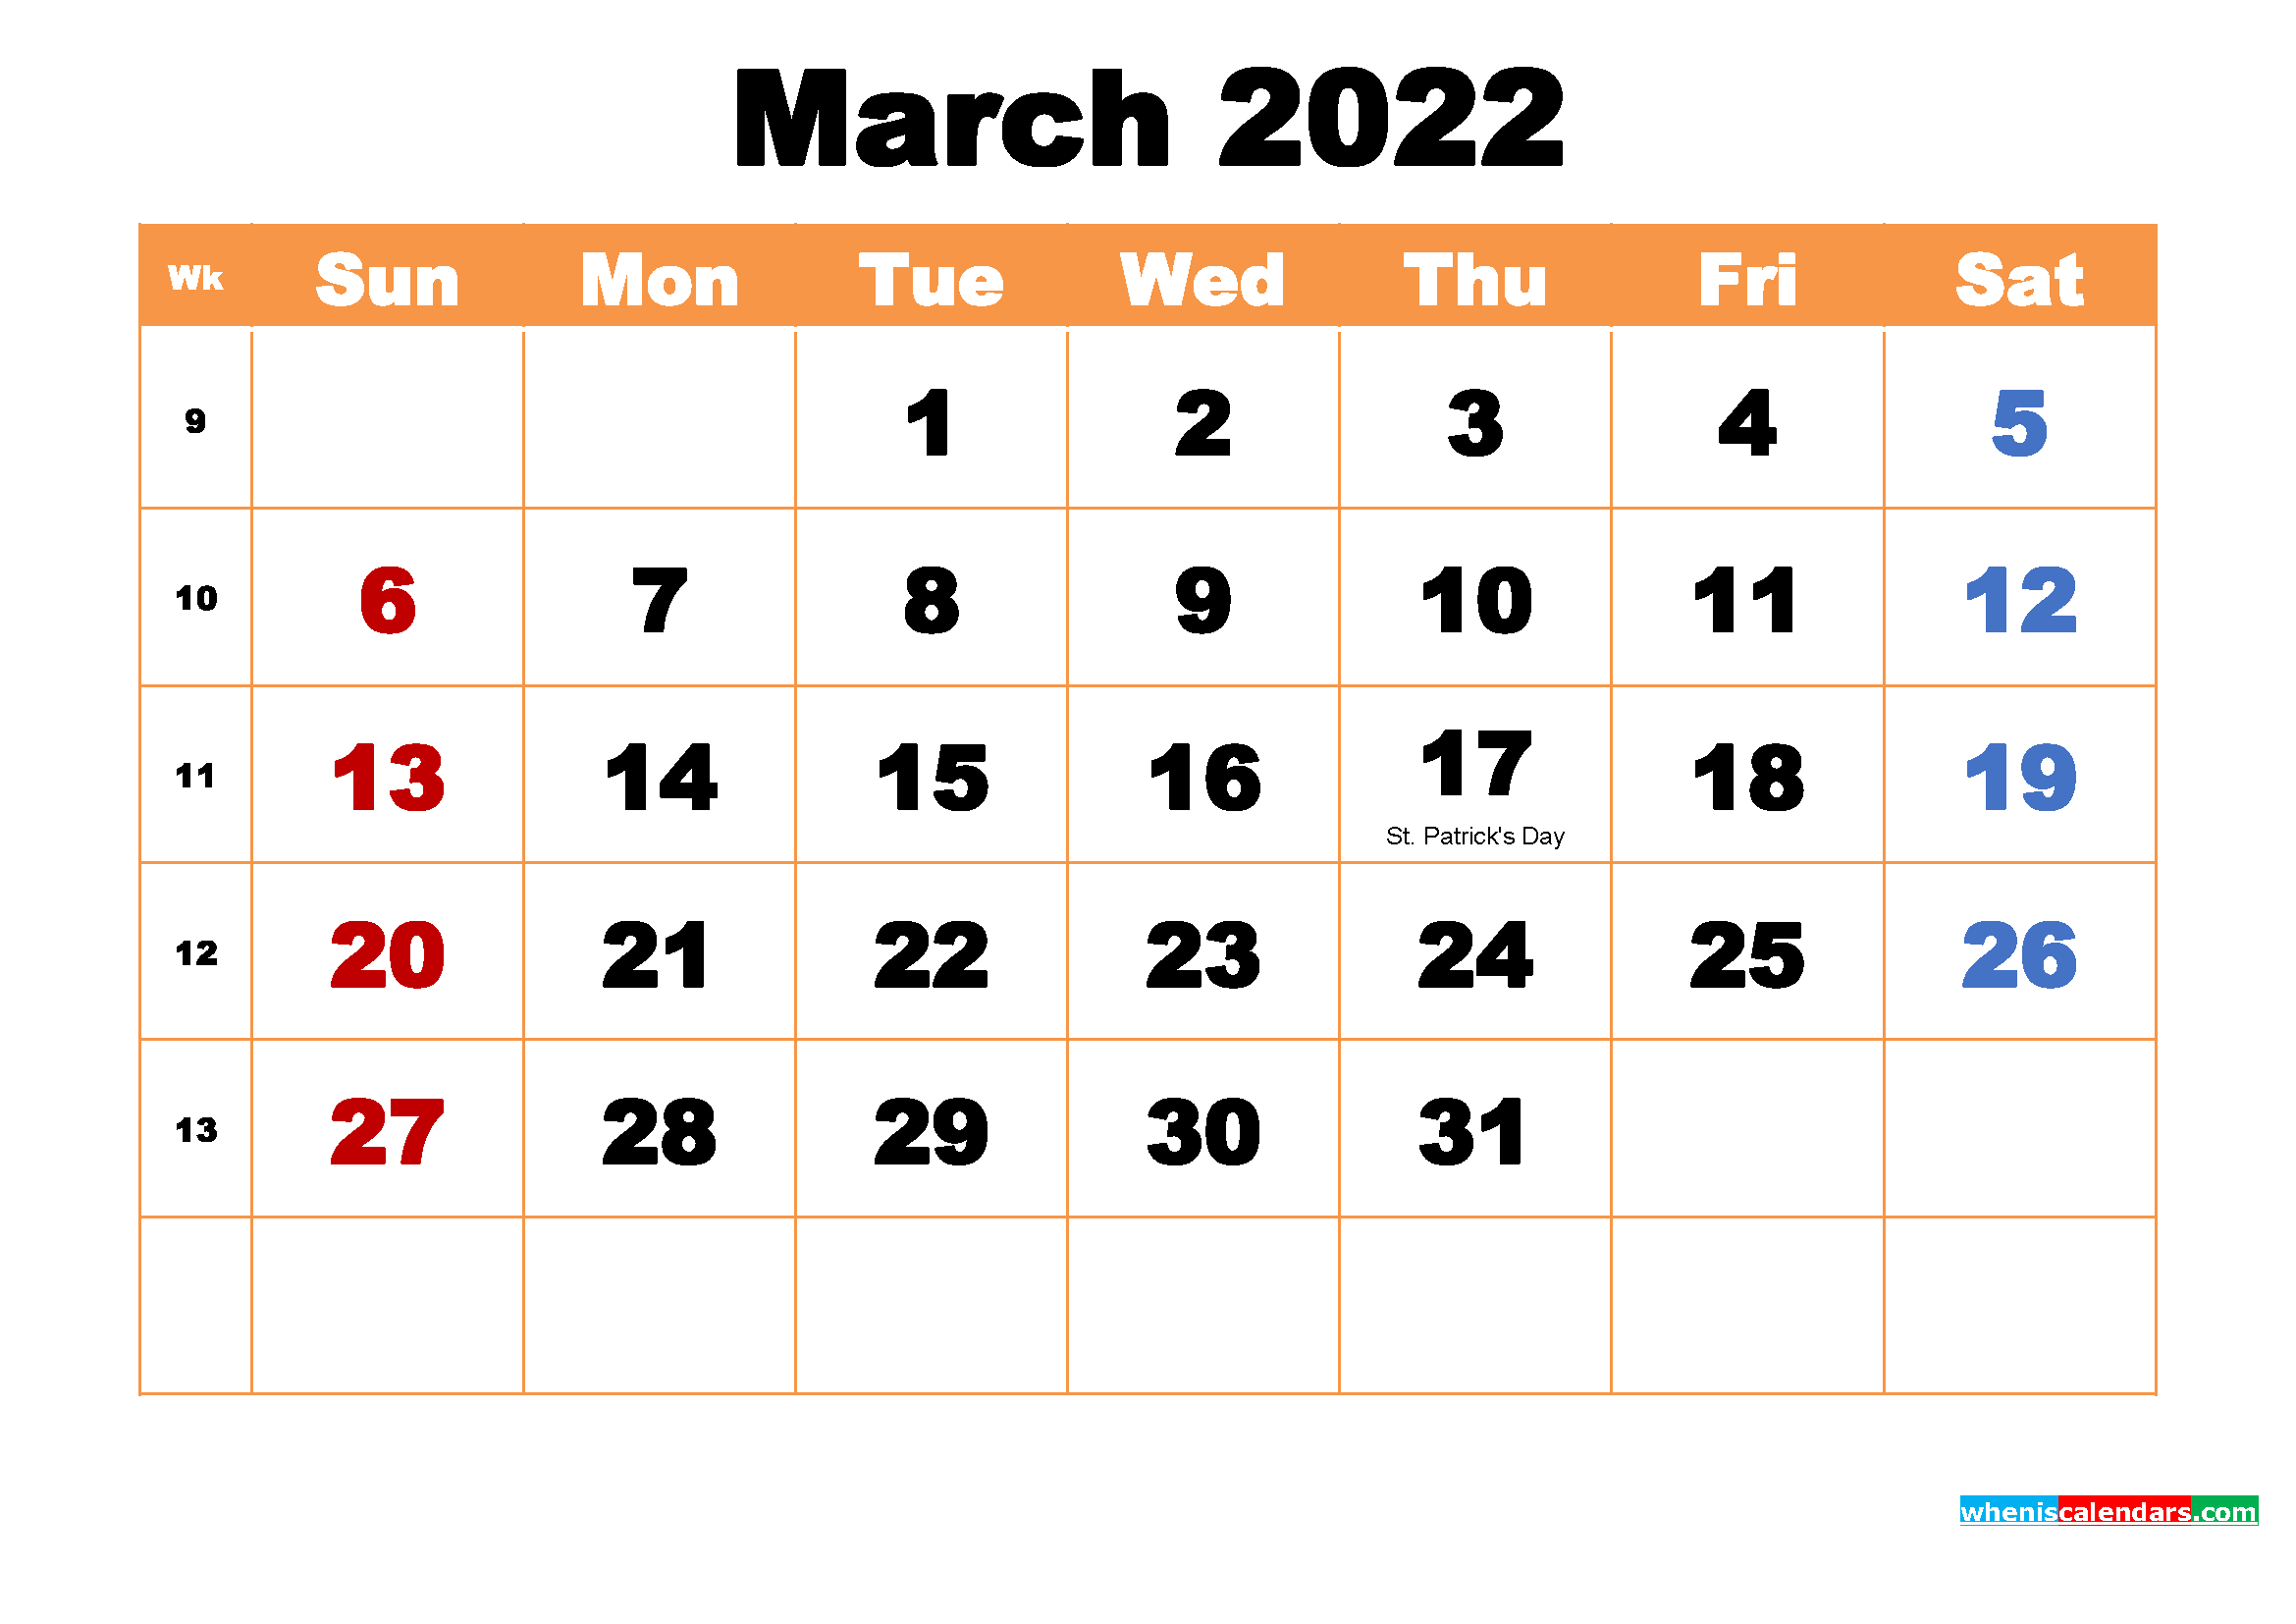 March 2022 Calendar Wallpapers - Top Free March 2022 Calendar Backgrounds - Wallpaperaccess